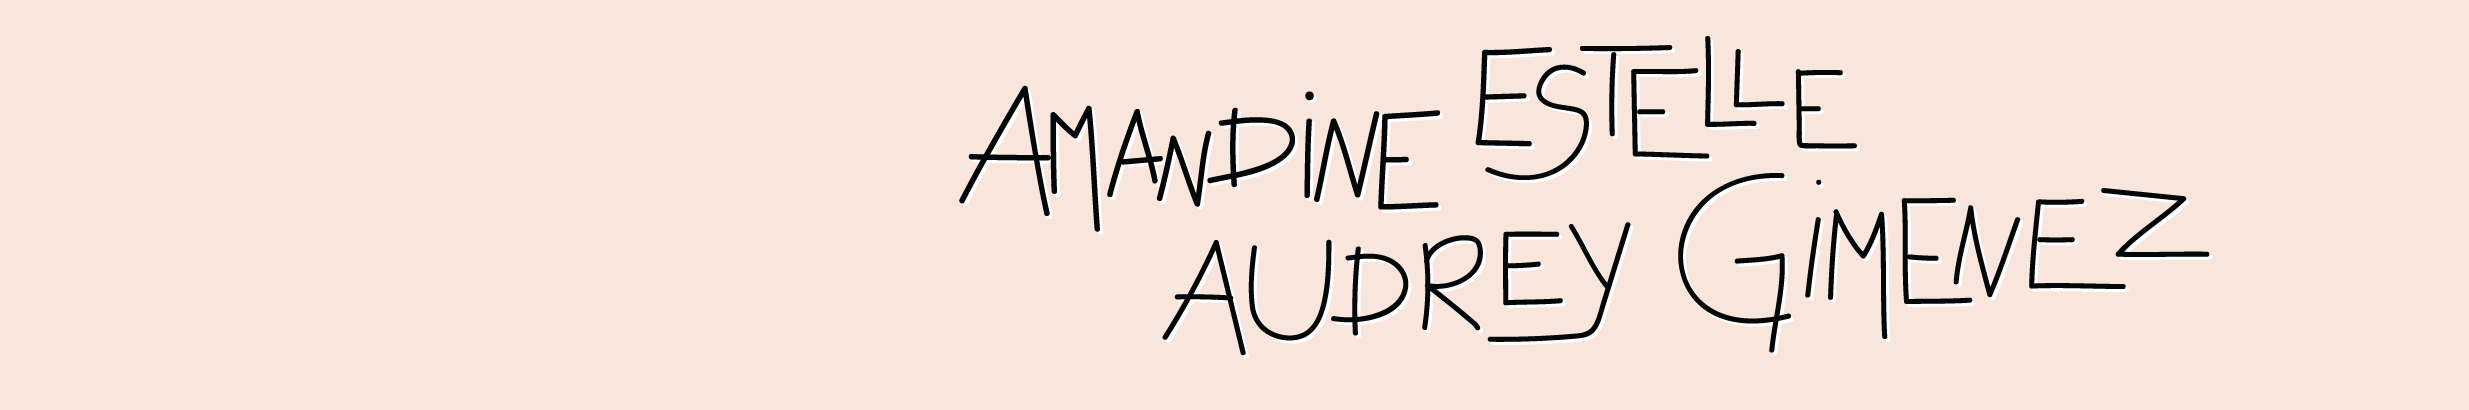 Amandine, Estelle, Audrey のプロファイルバナー